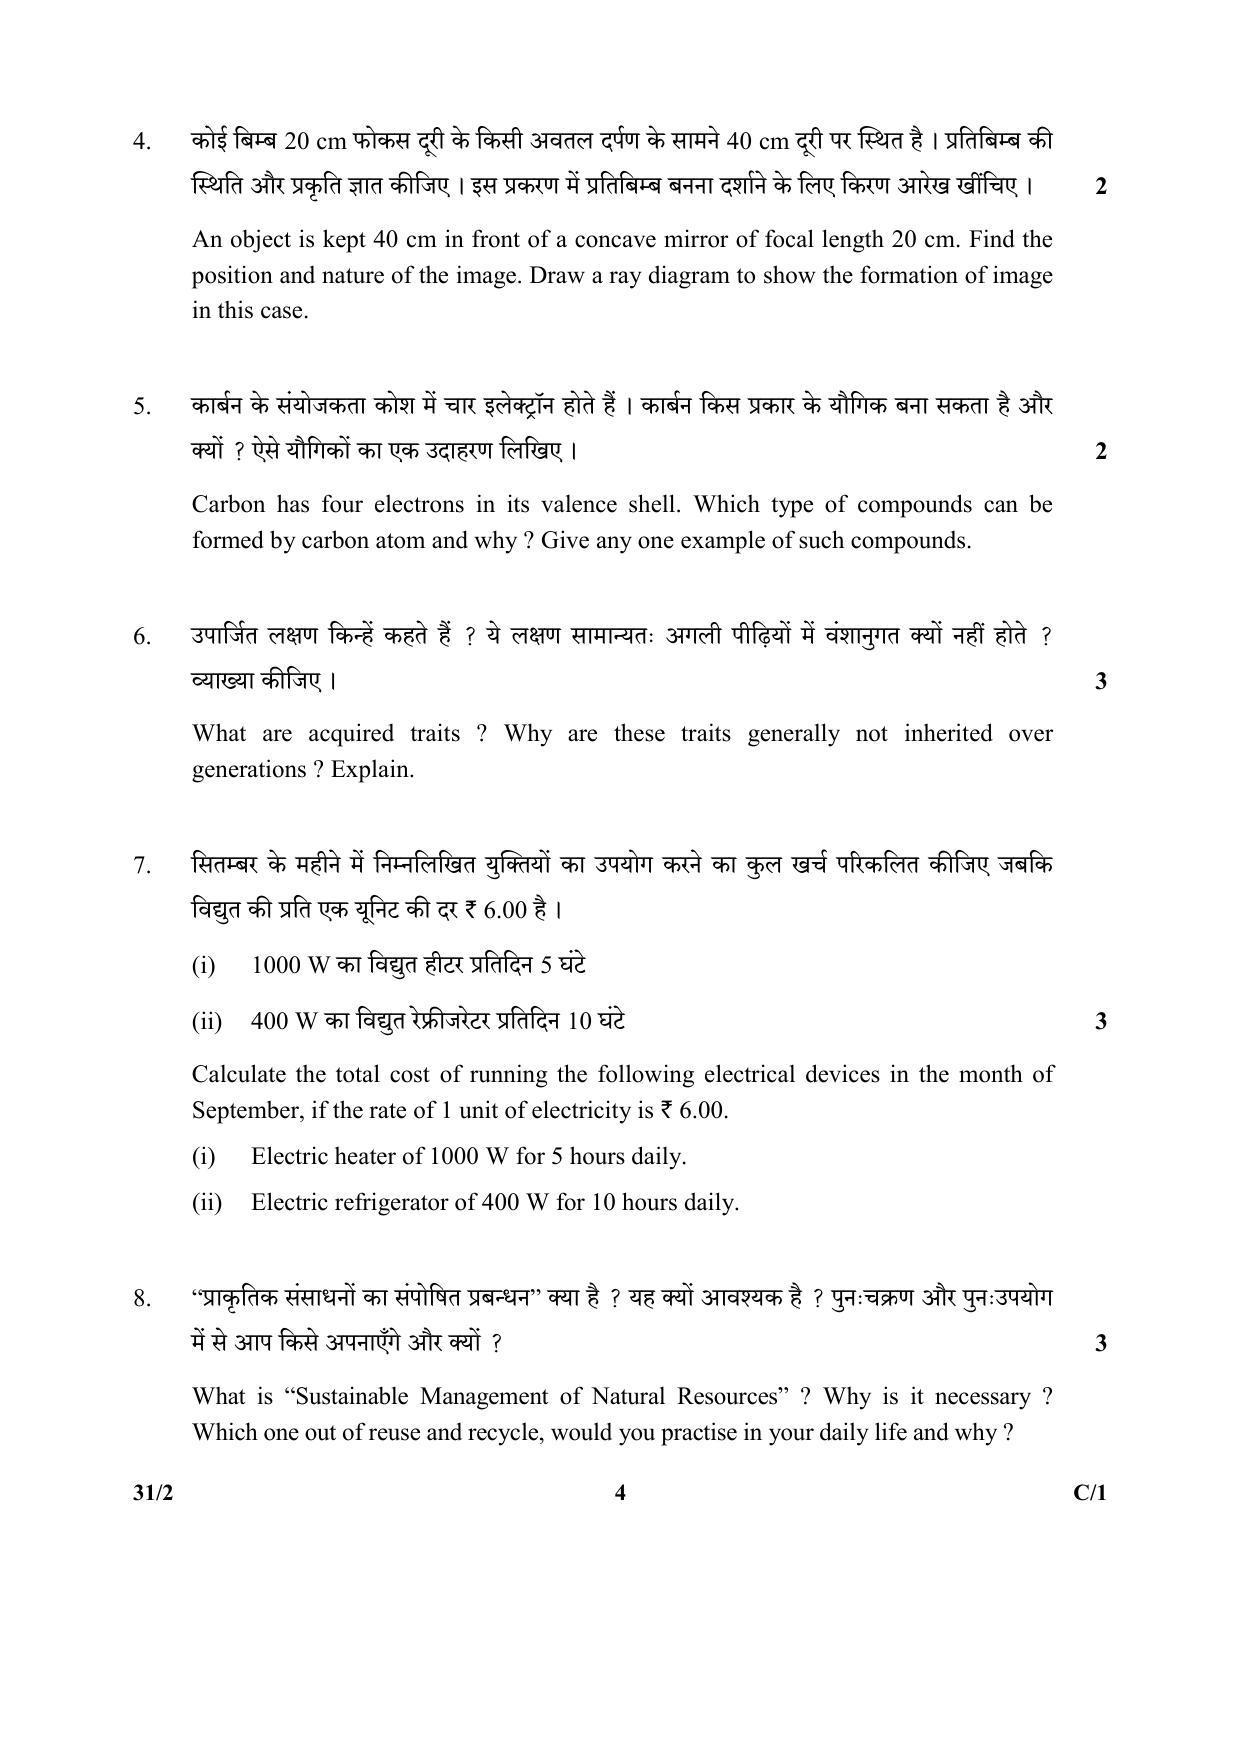 CBSE Class 10 41-2 Science PUNJABI VERSION 2018 Compartment Question Paper - Page 12